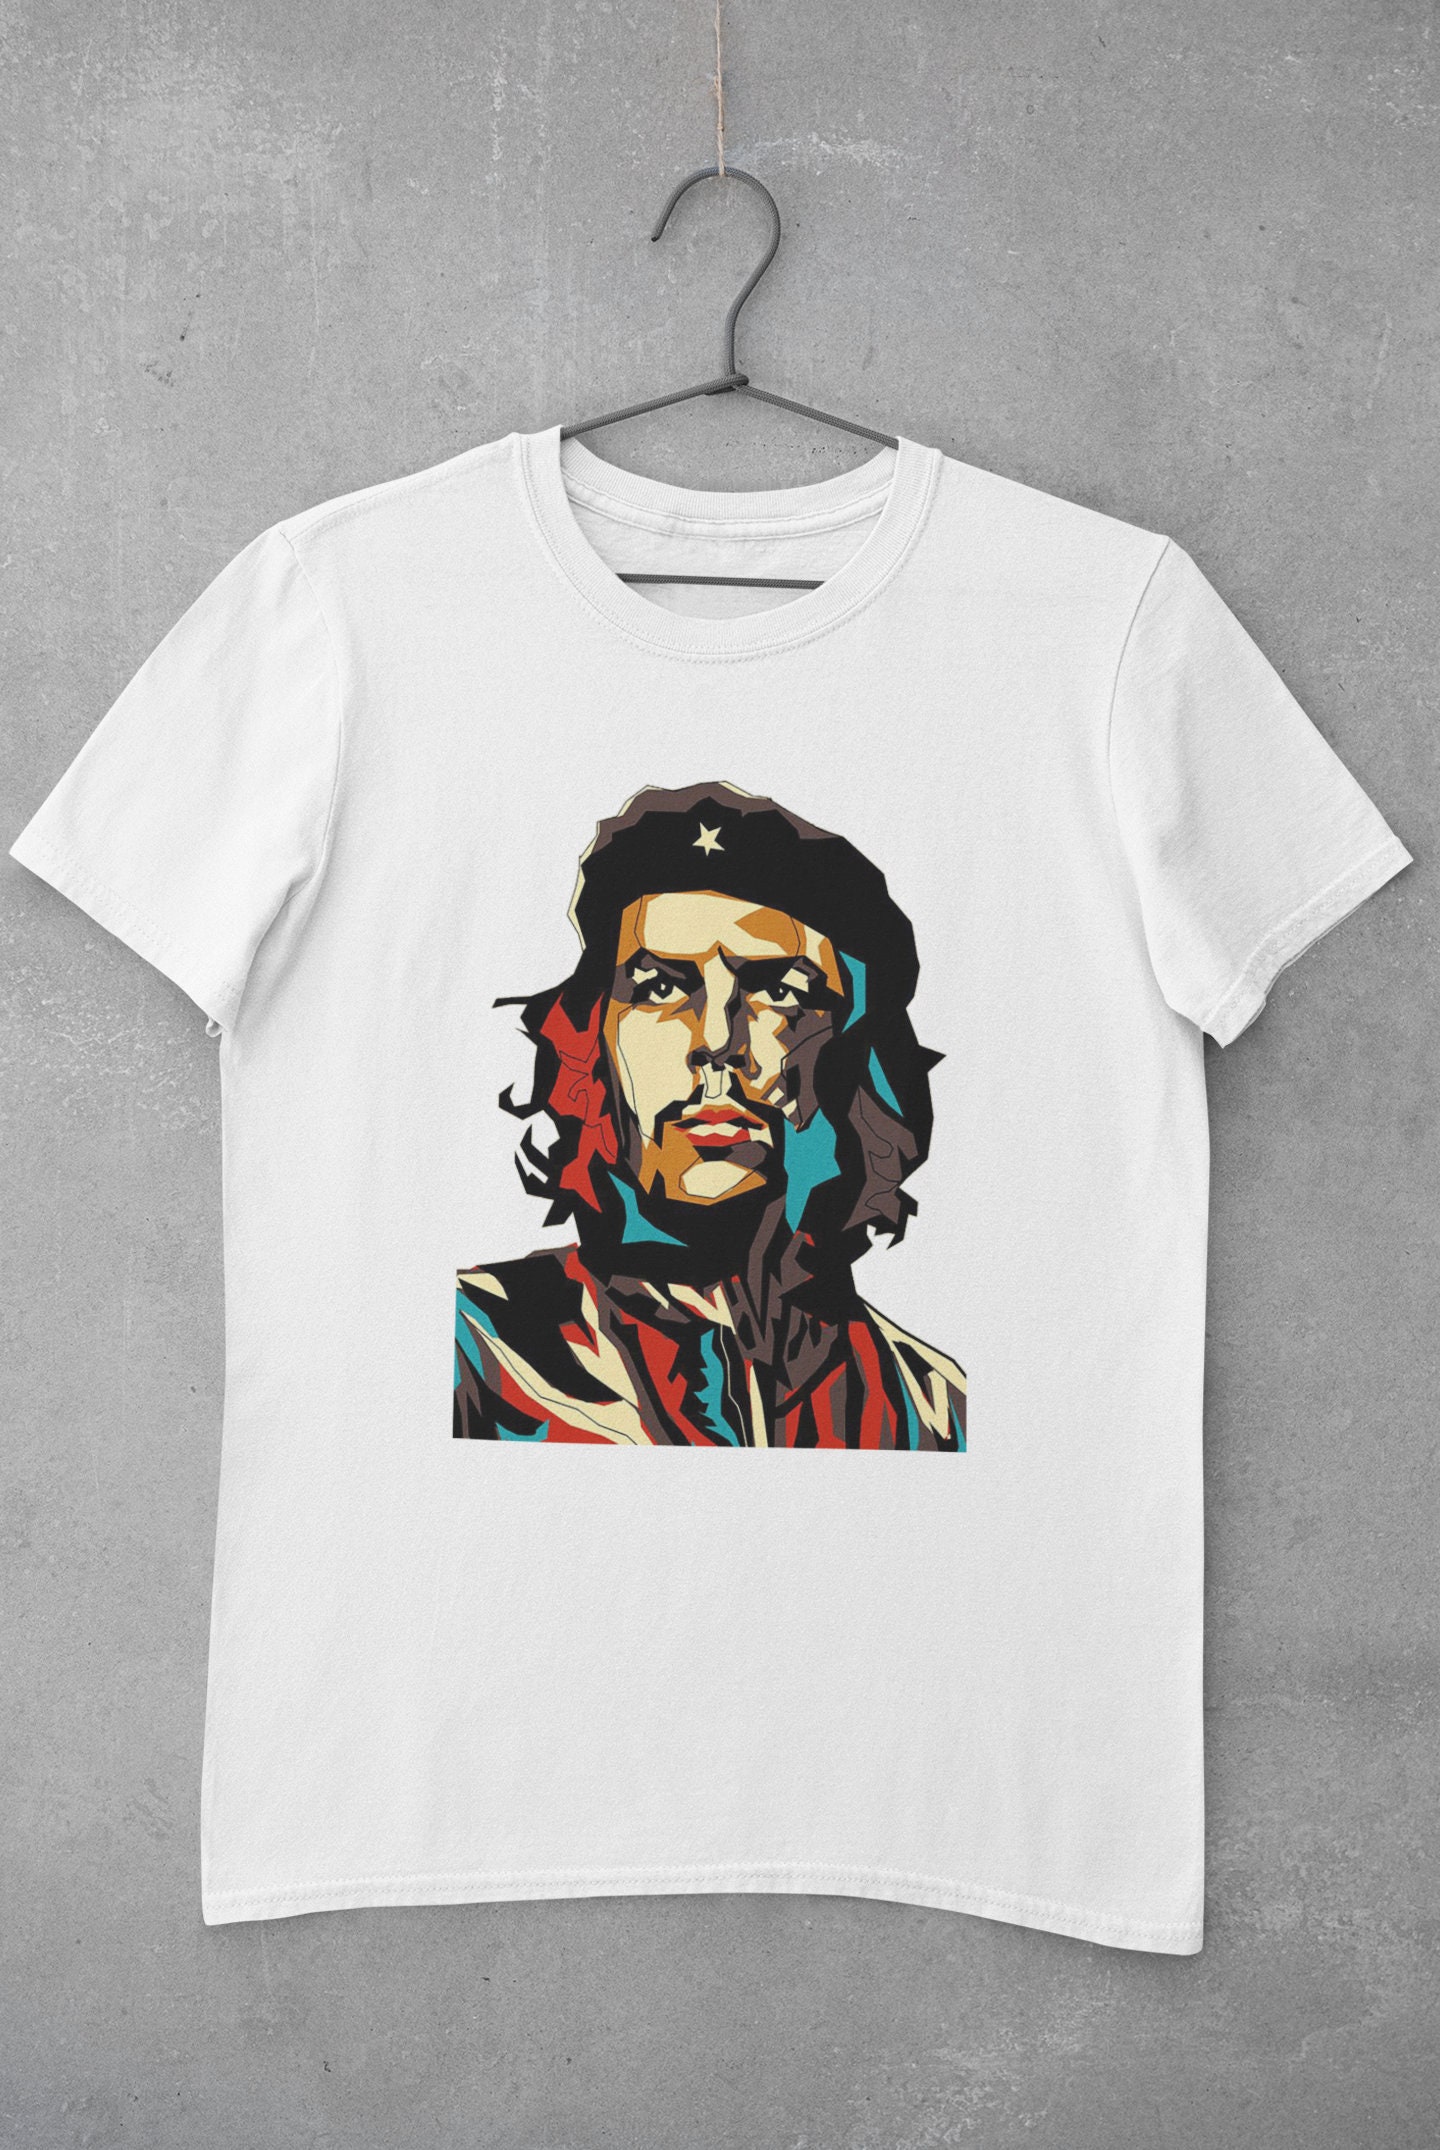 Buy Che Che Guevara T-shirt Revolution Online in India - Etsy